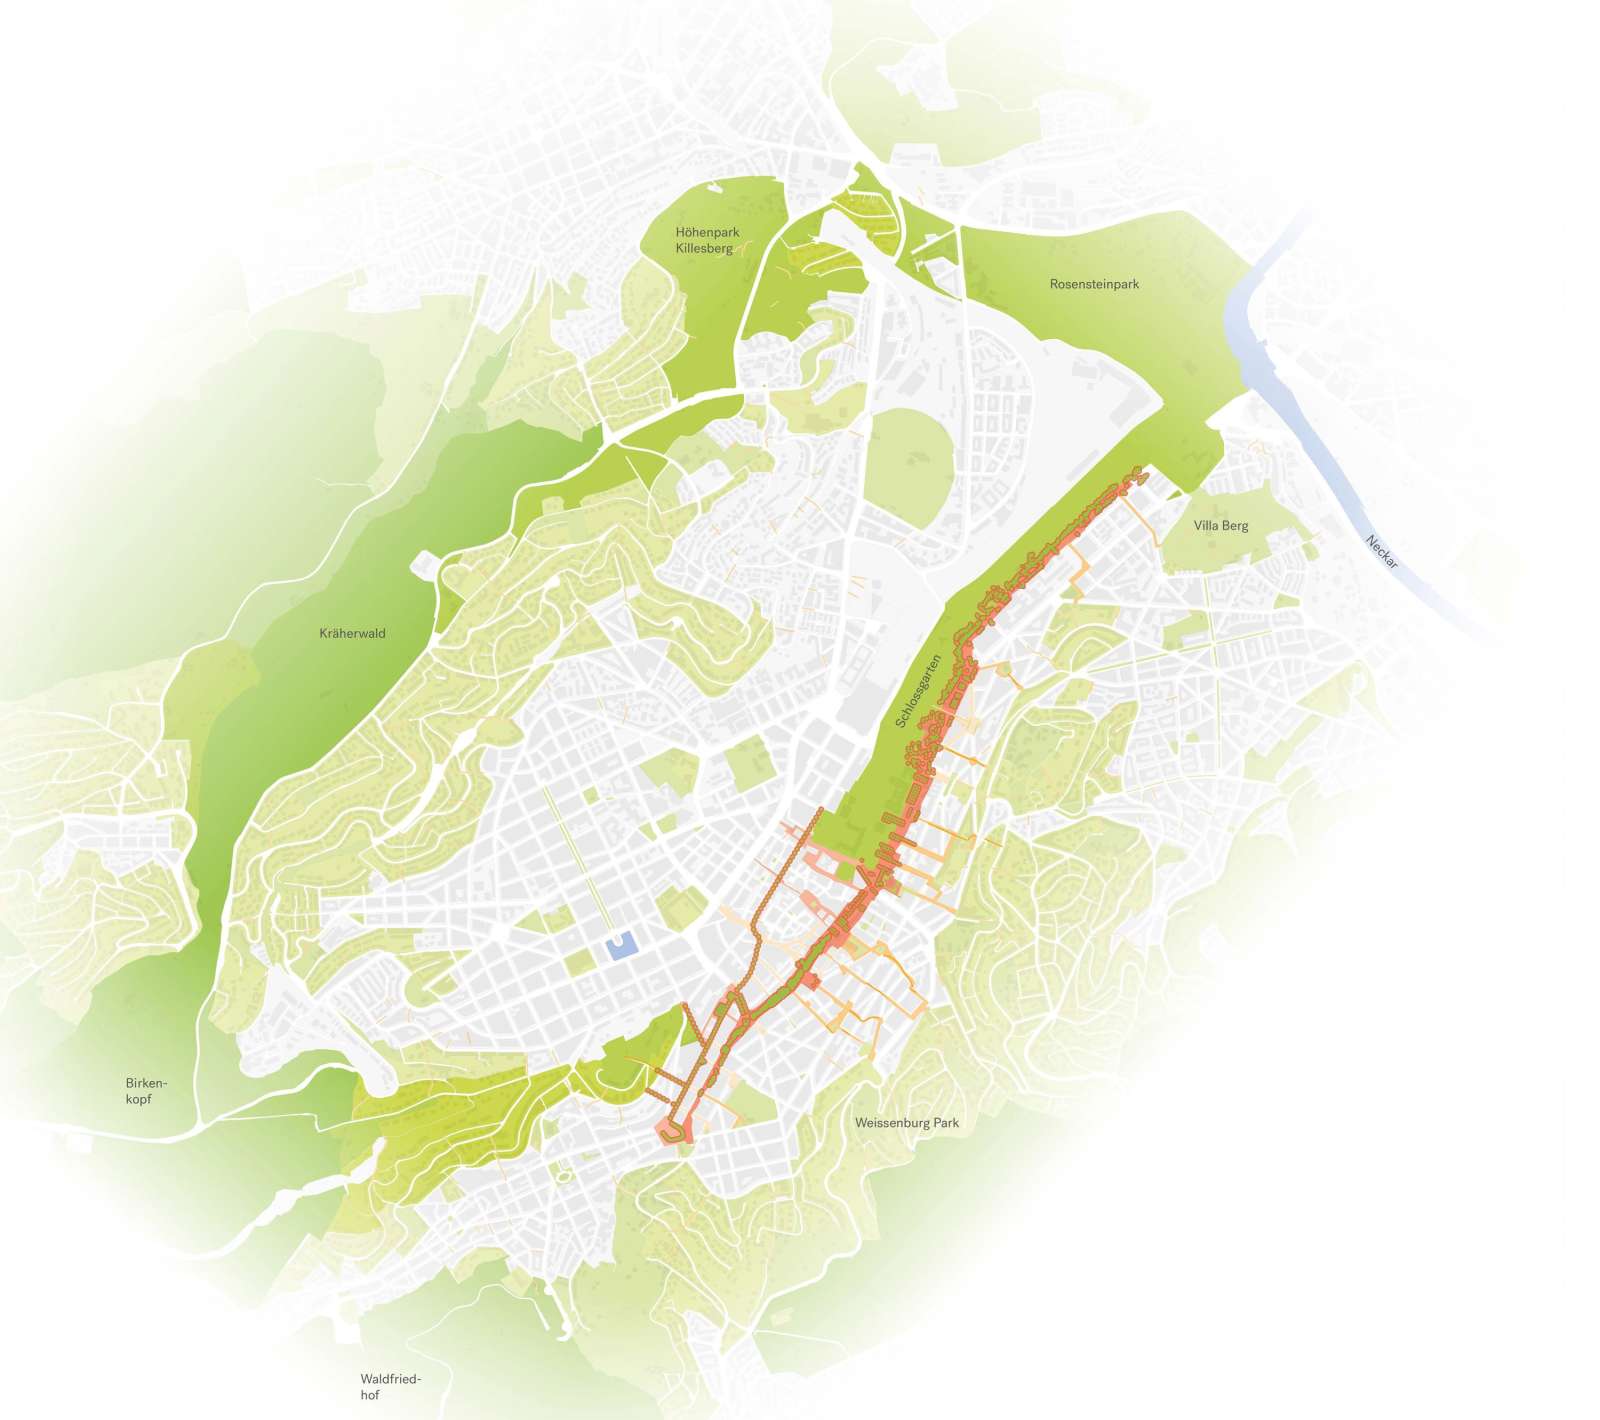 The new green joint closes the ›Green U‹ between Karlshöhe und Schloßgarten and forms a ›Geen O‹.